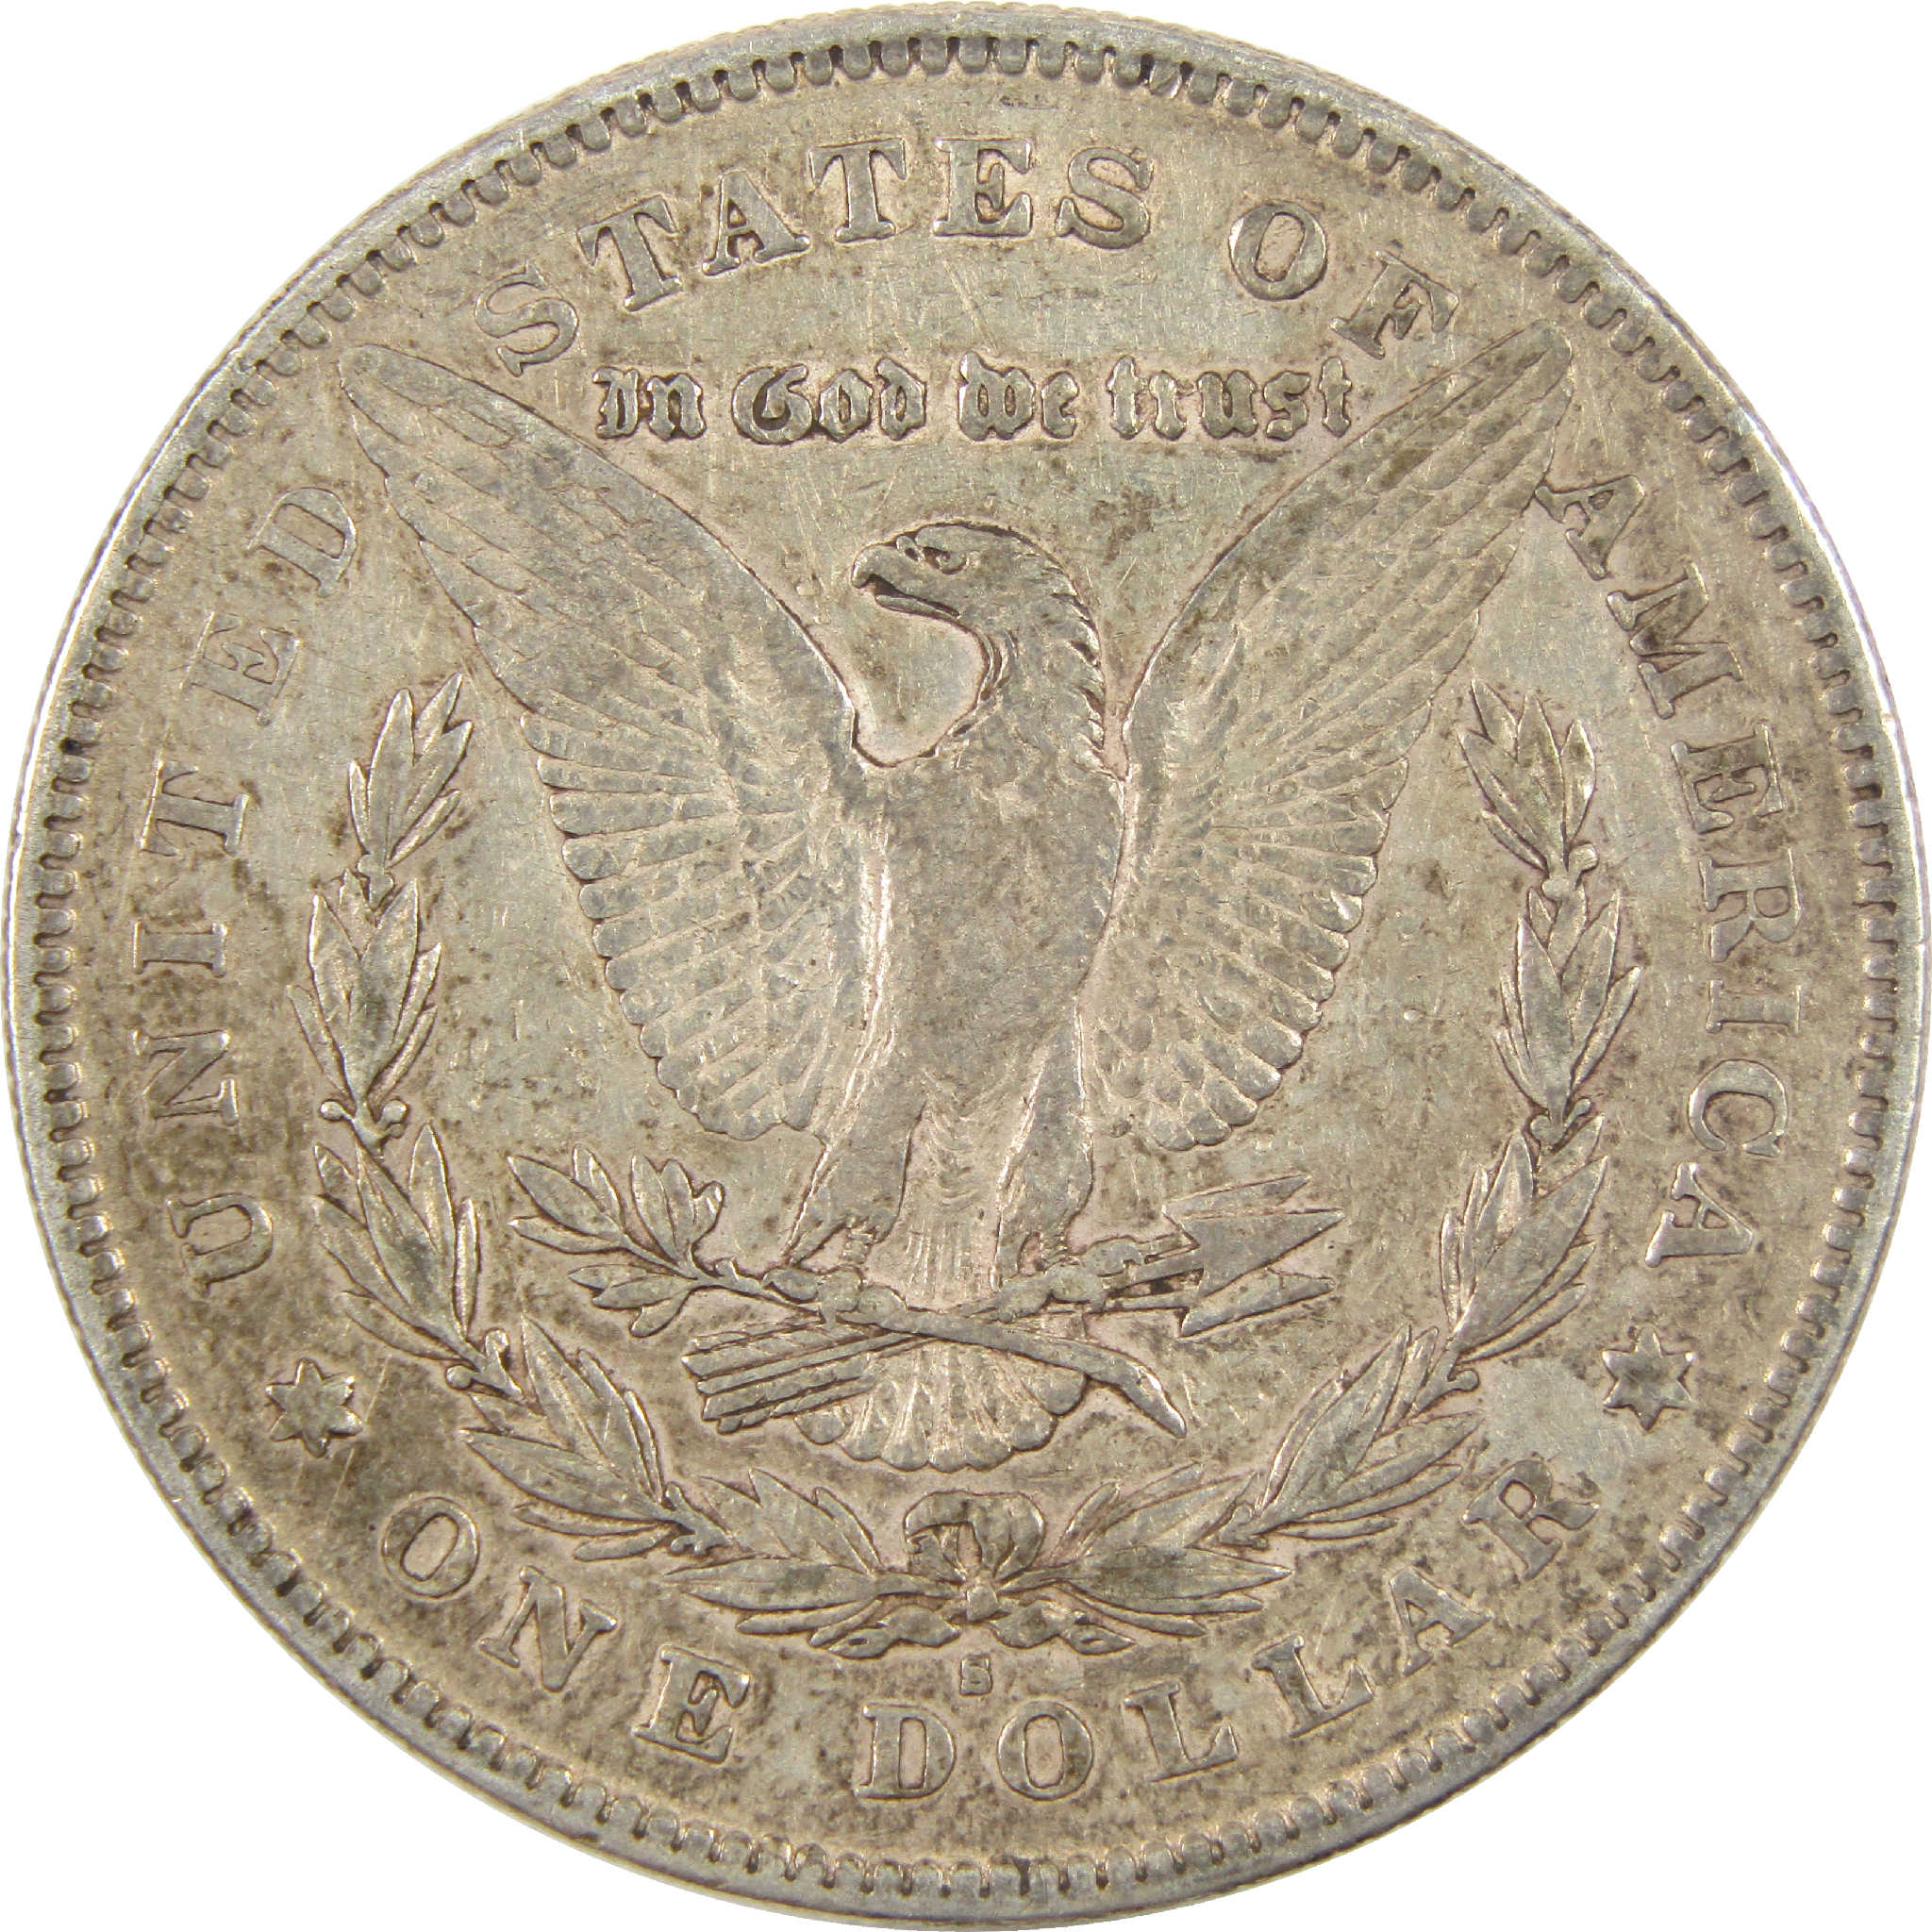 1879 S Rev 78 Morgan Dollar VF Very Fine Silver $1 Coin SKU:I11457 - Morgan coin - Morgan silver dollar - Morgan silver dollar for sale - Profile Coins &amp; Collectibles